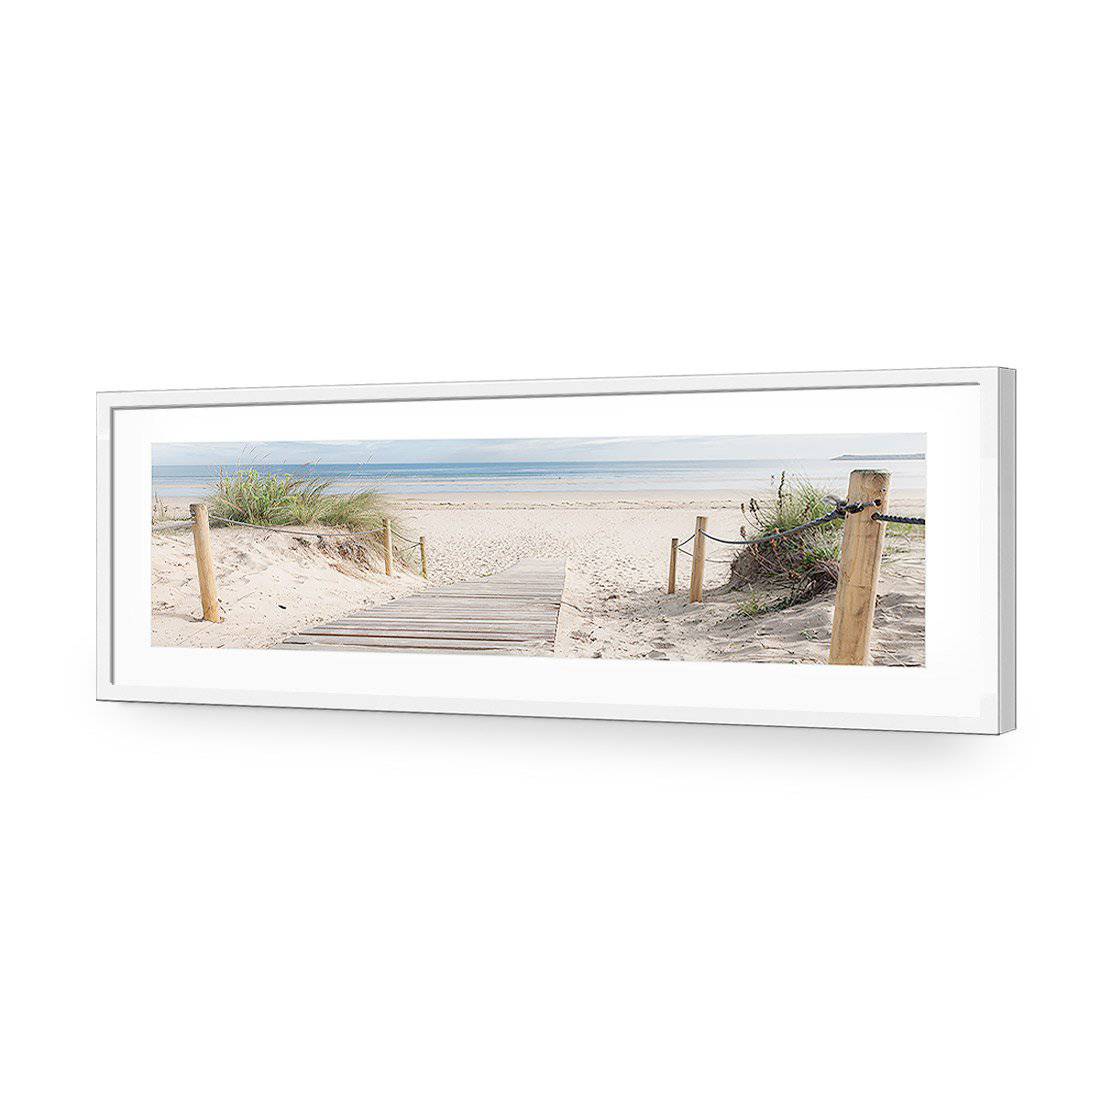 Beach Path, Long-Acrylic-Wall Art Design-With Border-Acrylic - White Frame-60x20cm-Wall Art Designs